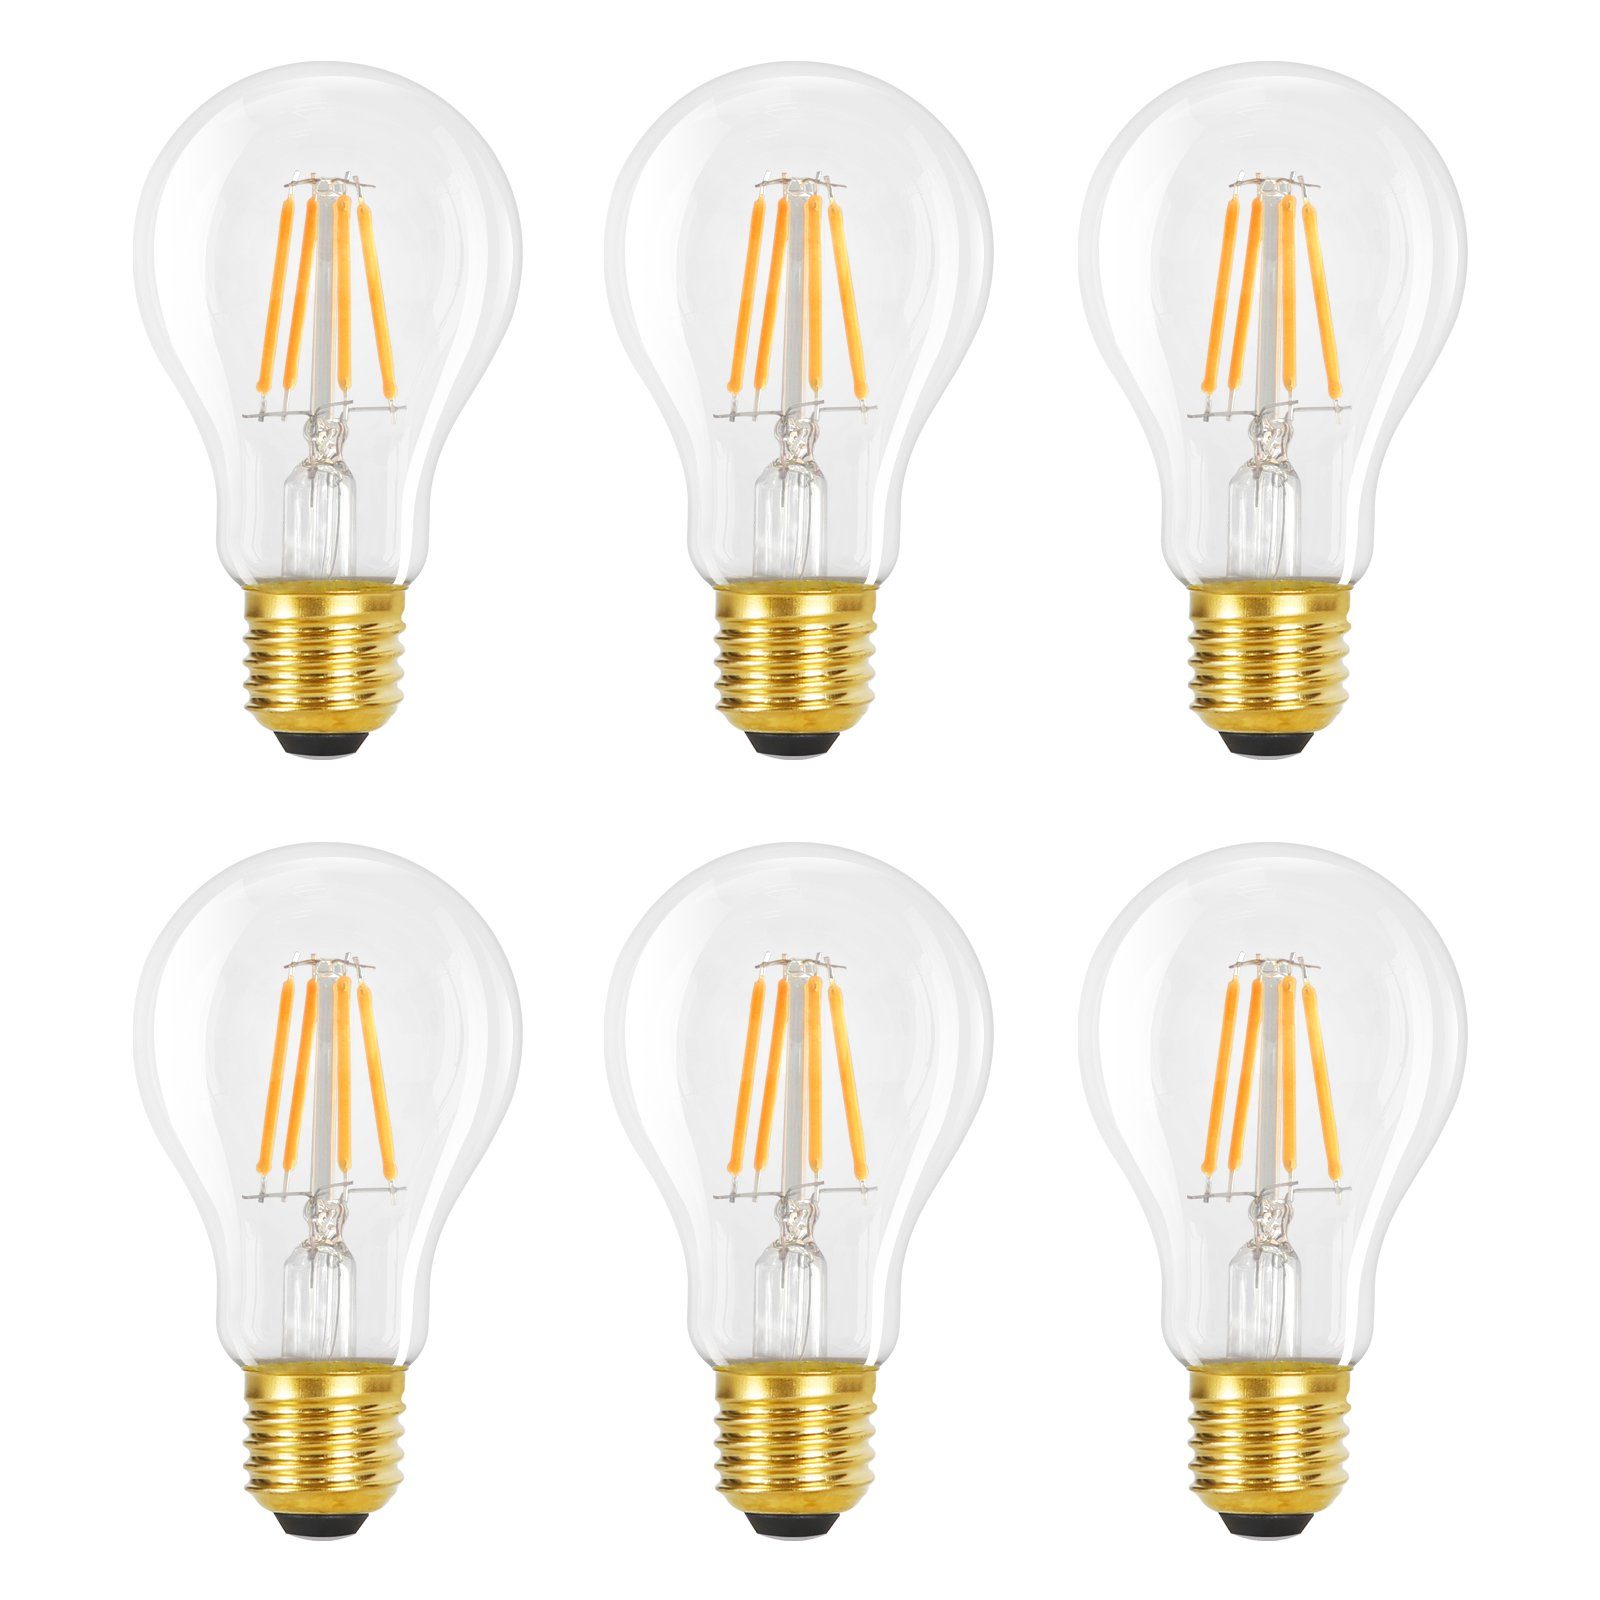 ZMH LED-Leuchtmittel E27 Glühbirne A60 Vintage Edison 4W 2700K Warmweiss Glühlampe, E27, 6 St., 3000k, Nicht Dimmbar